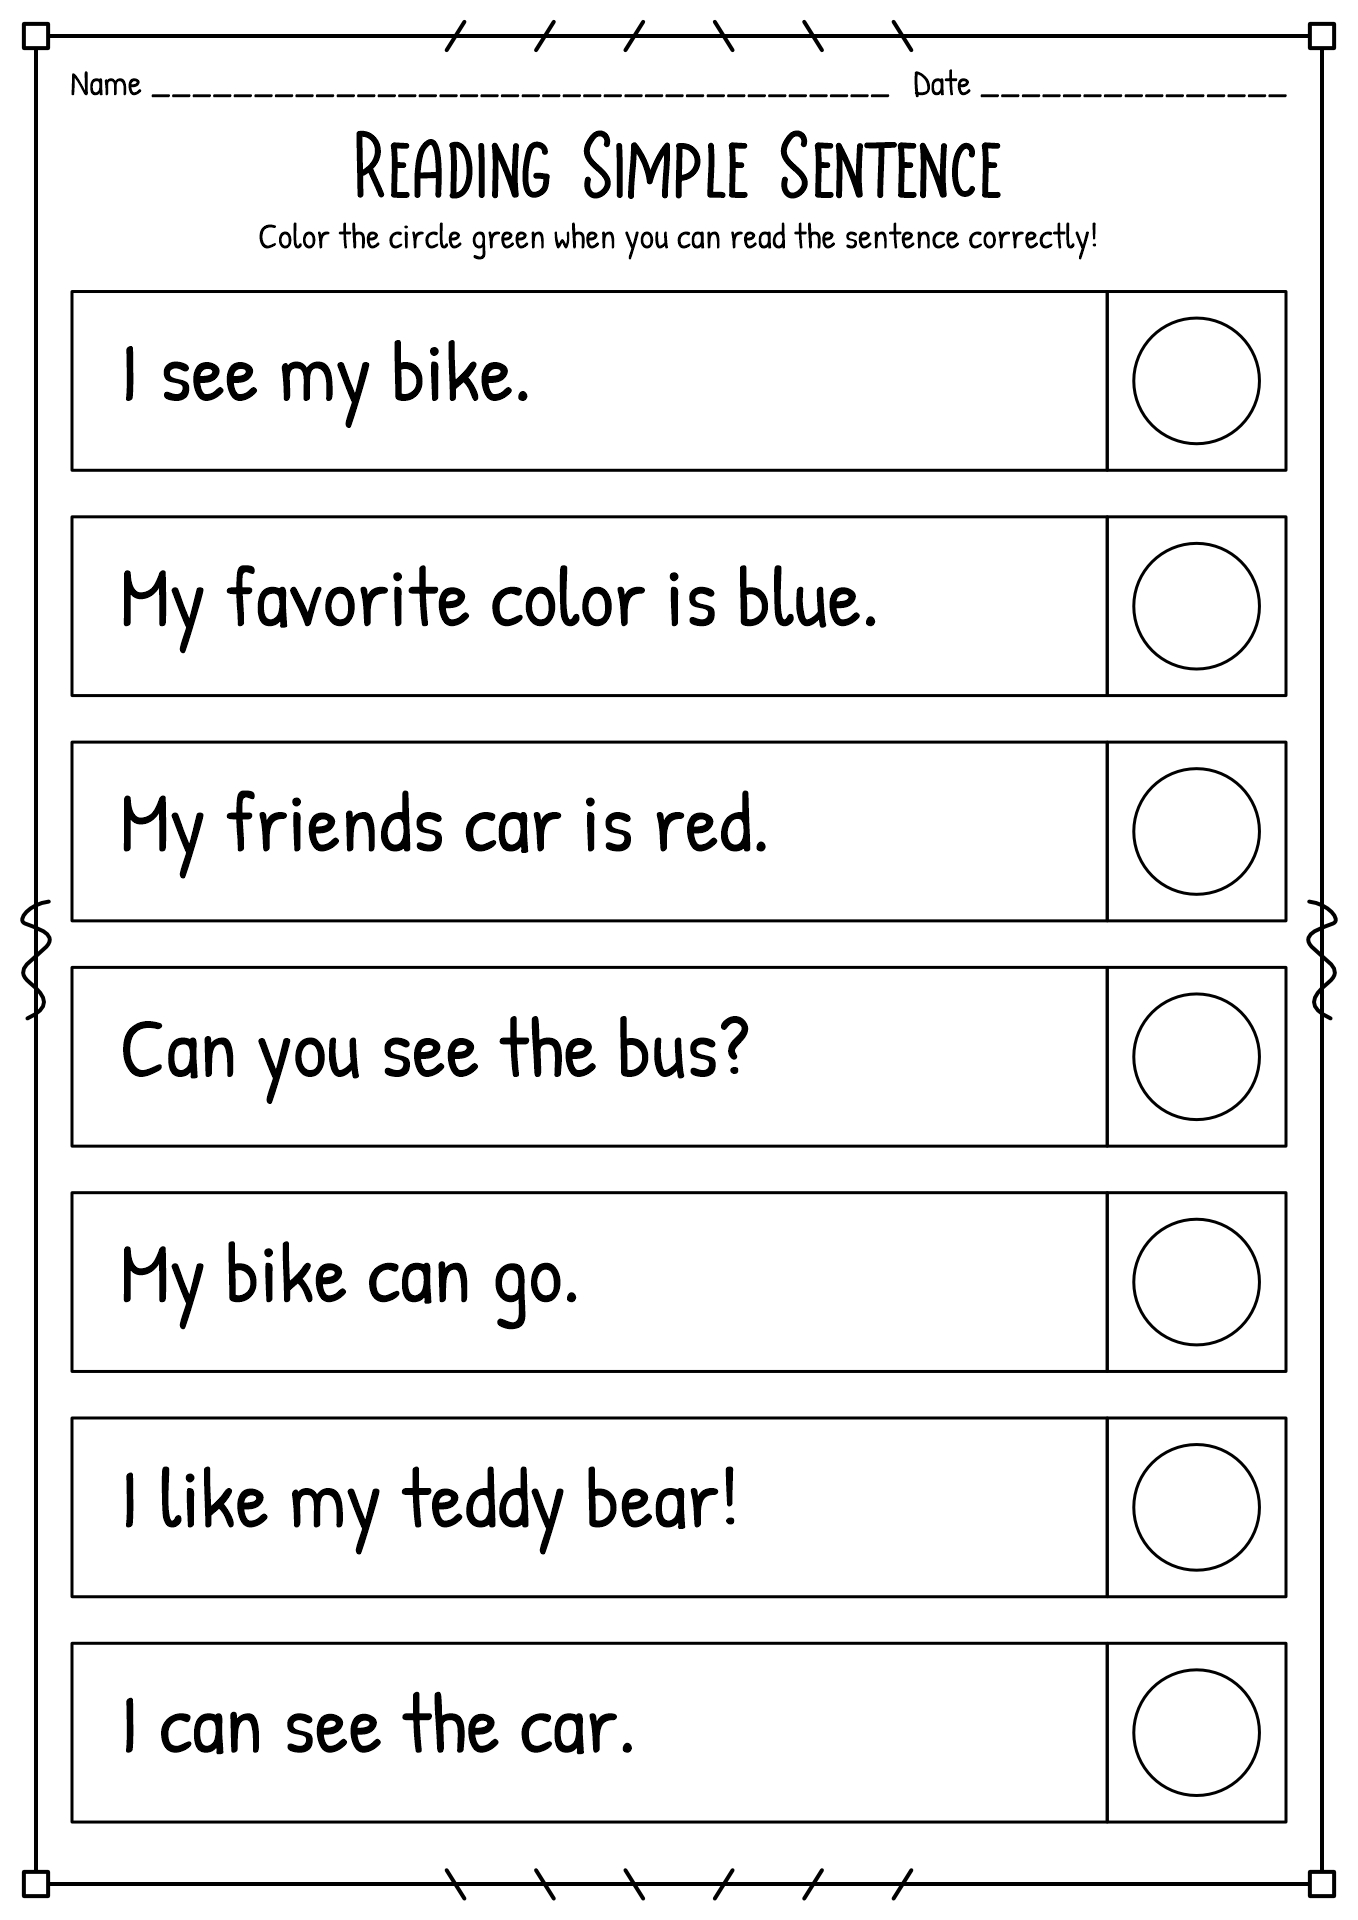 Reading Simple Sentence Kindergarten